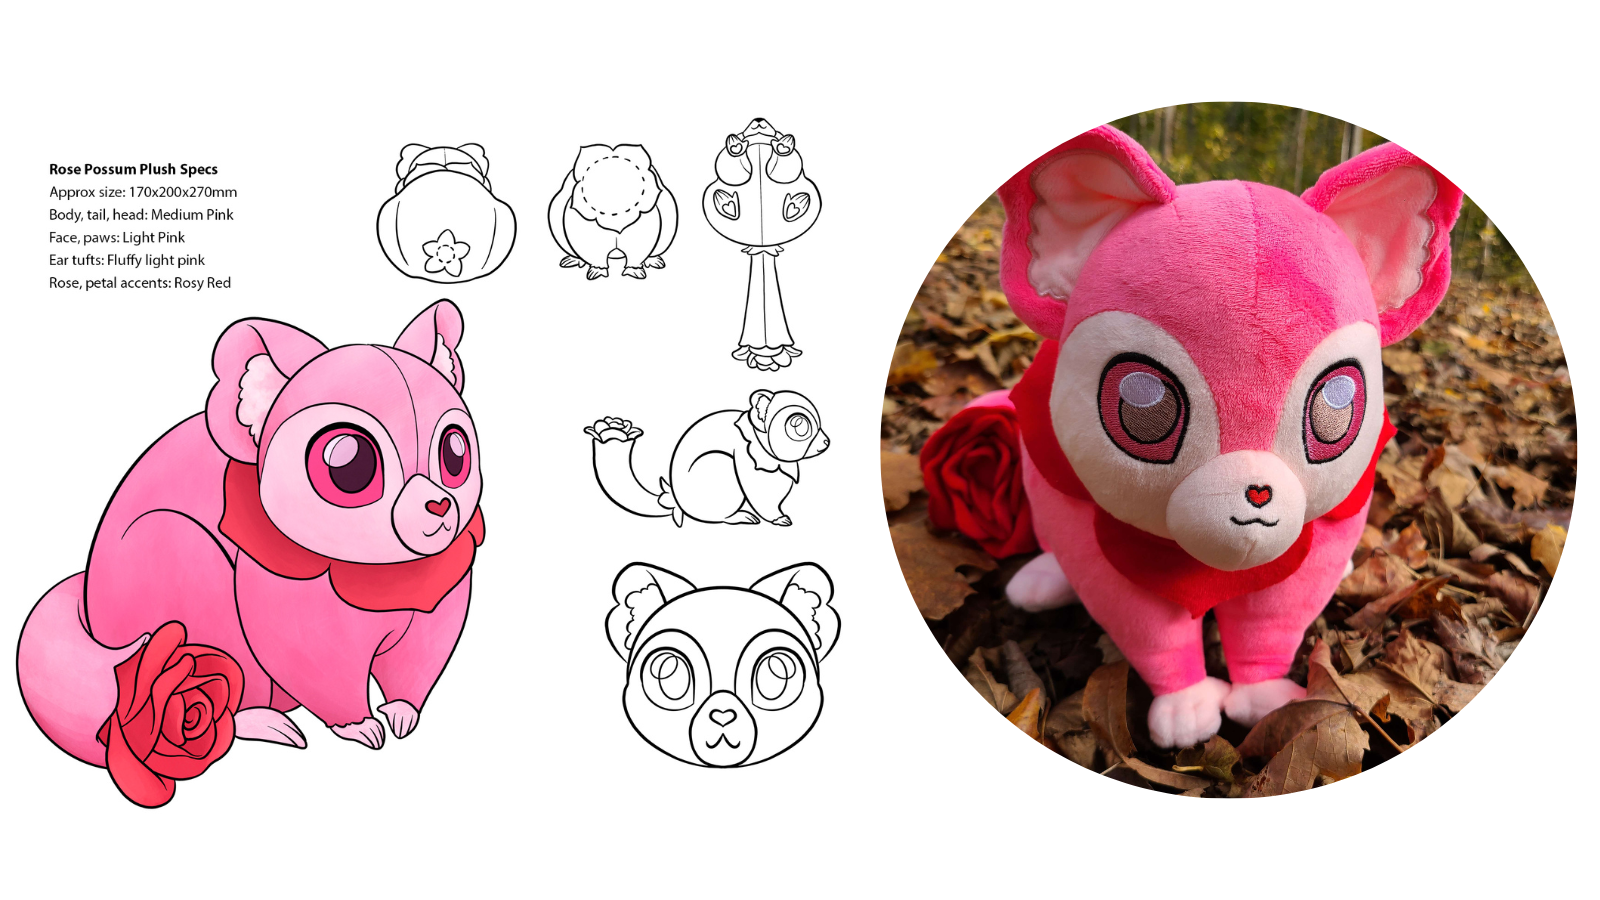 Rose Possum sketches and mock-up plush